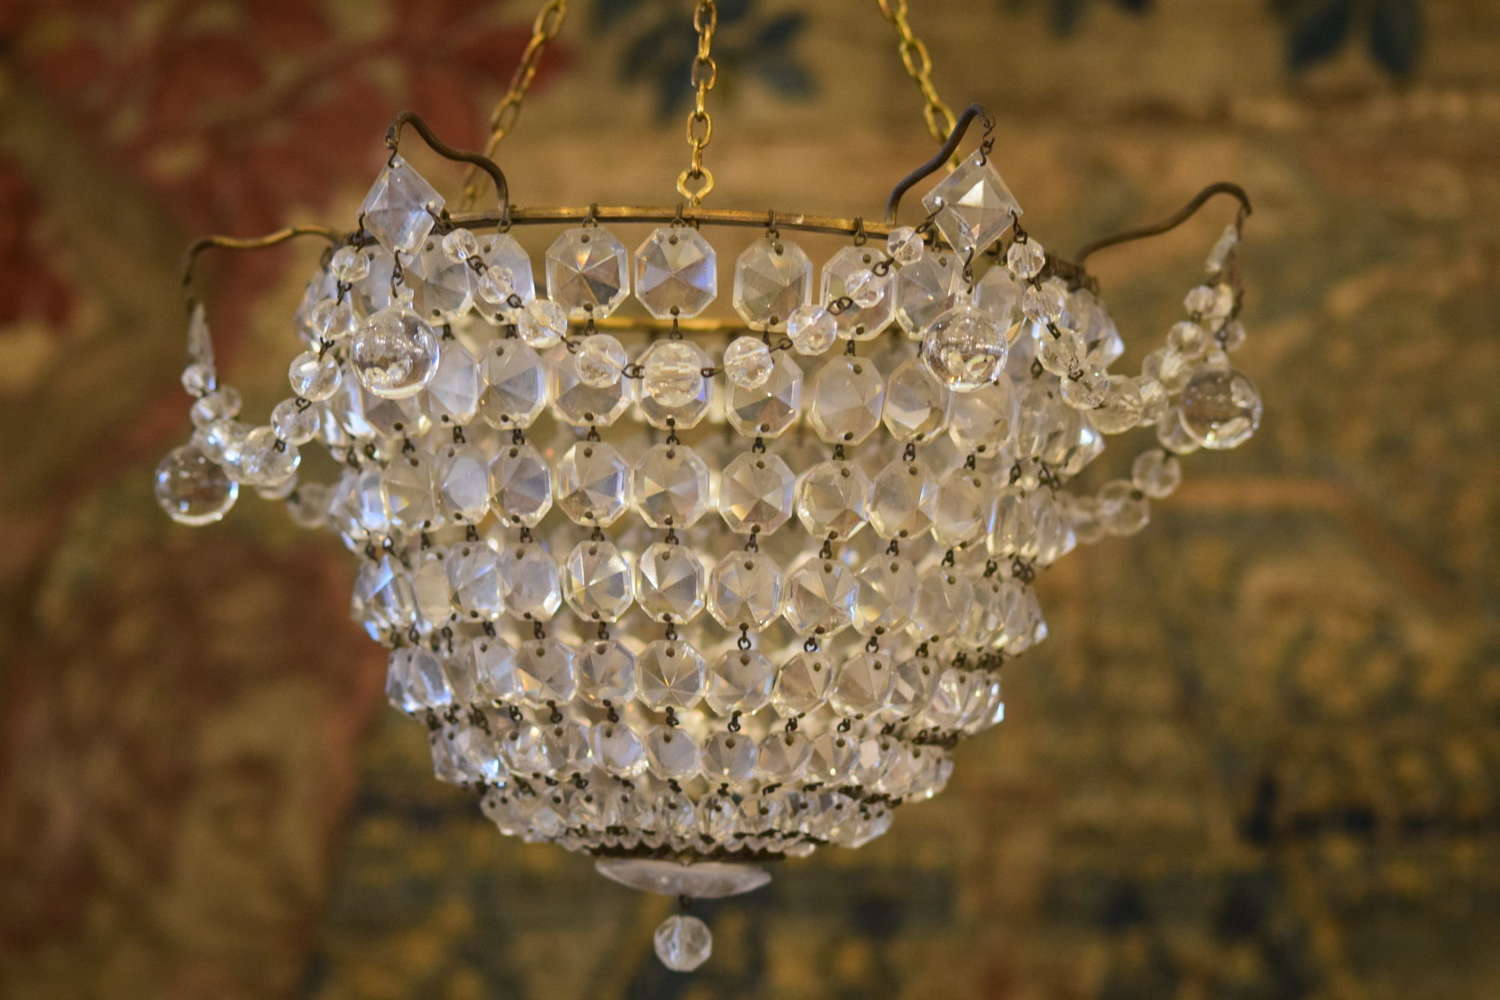 An exquisite Edwardian cut crystal glass chandelier